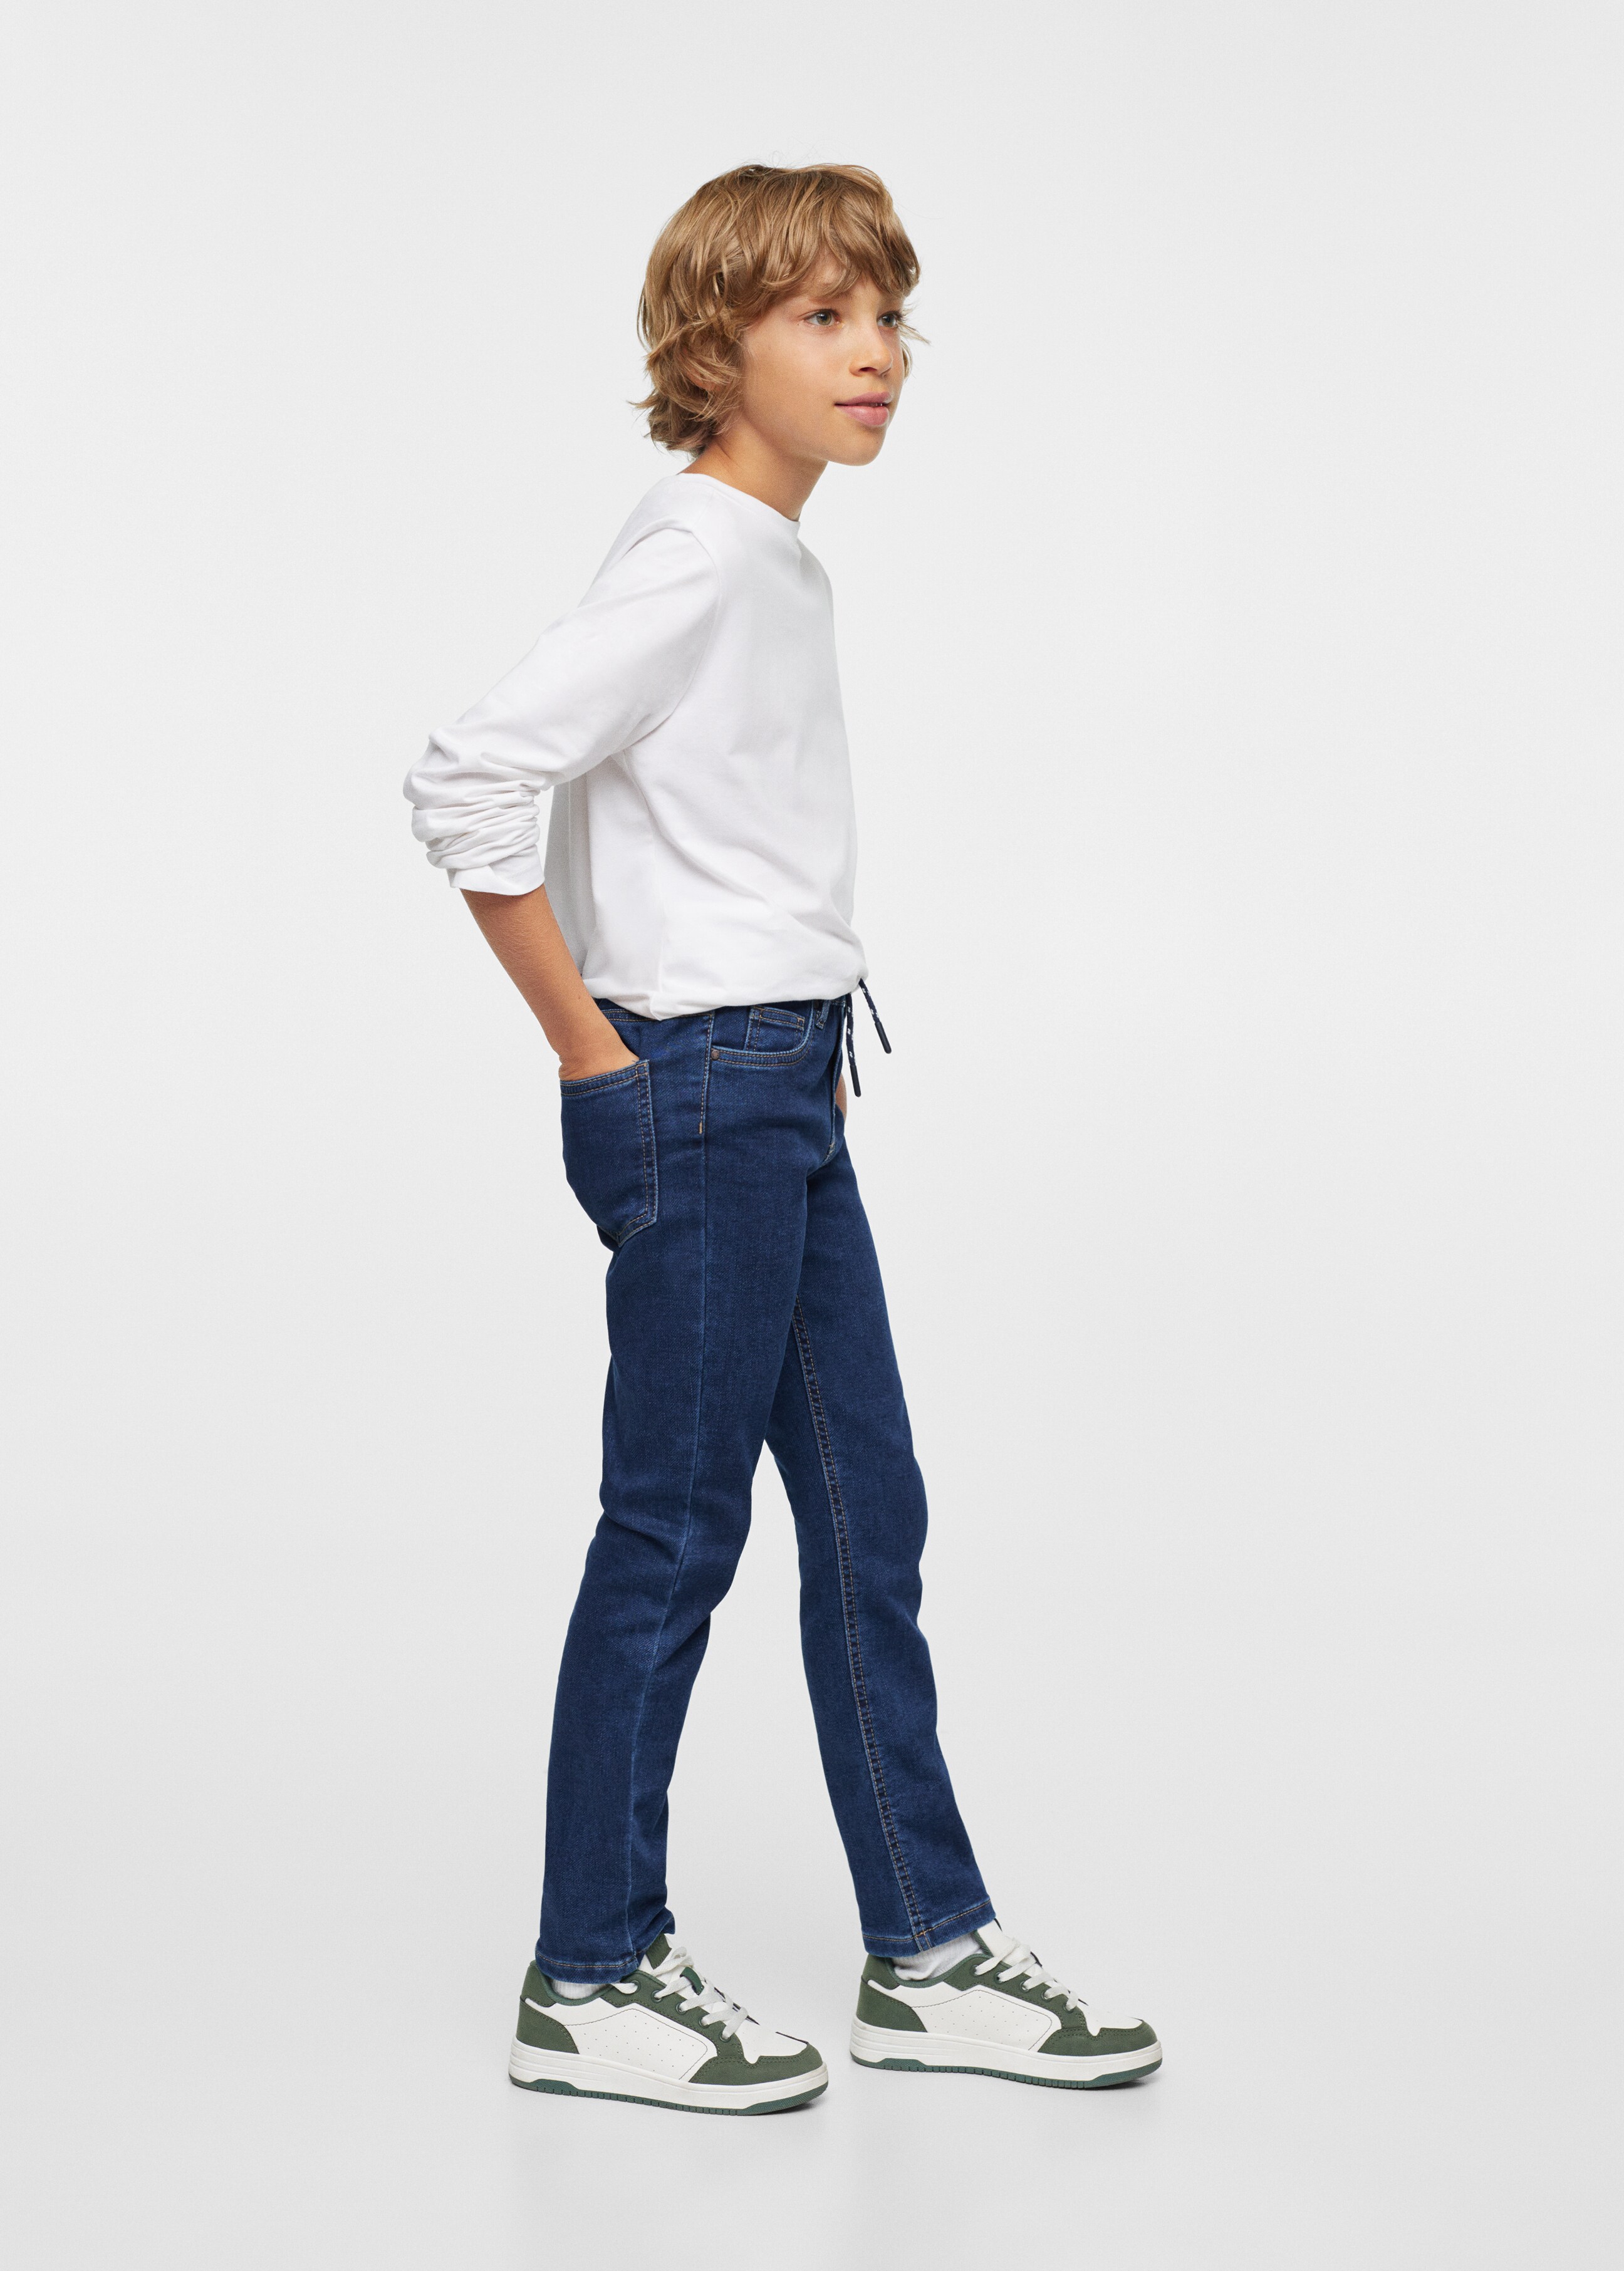 Lace drawstring waist jeans - Medium plane